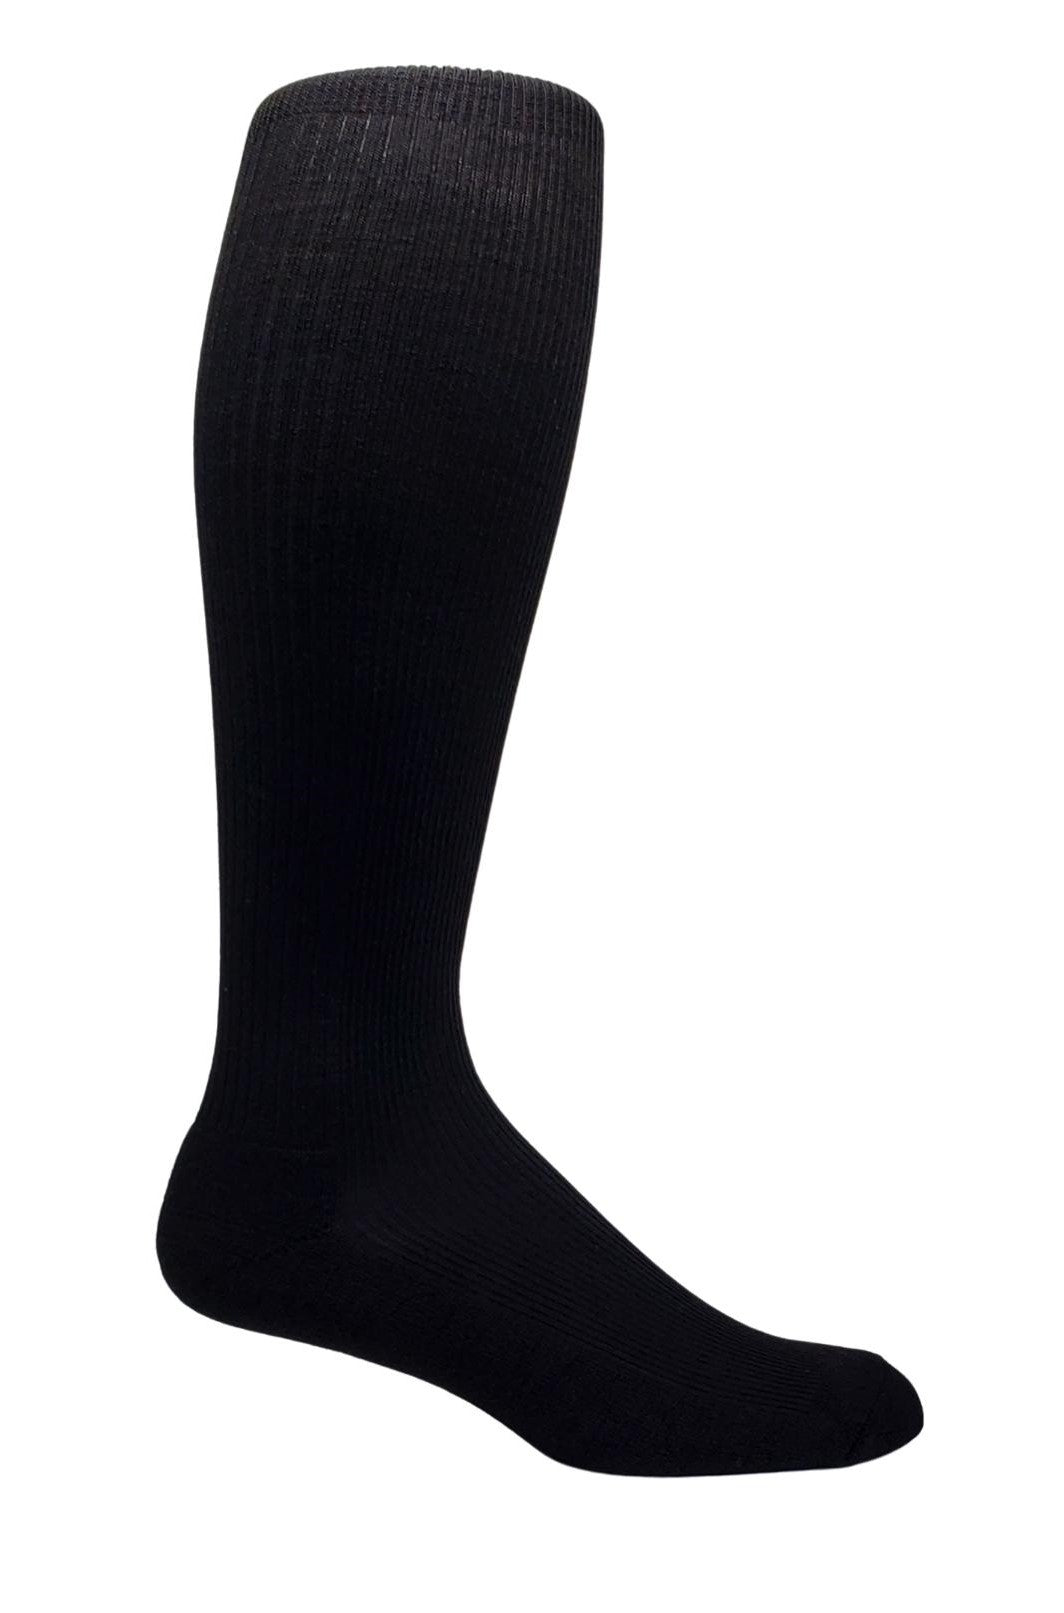 Vagden "No Ordinary Sock" Merino Wool Cushion Sole Knee High Socks